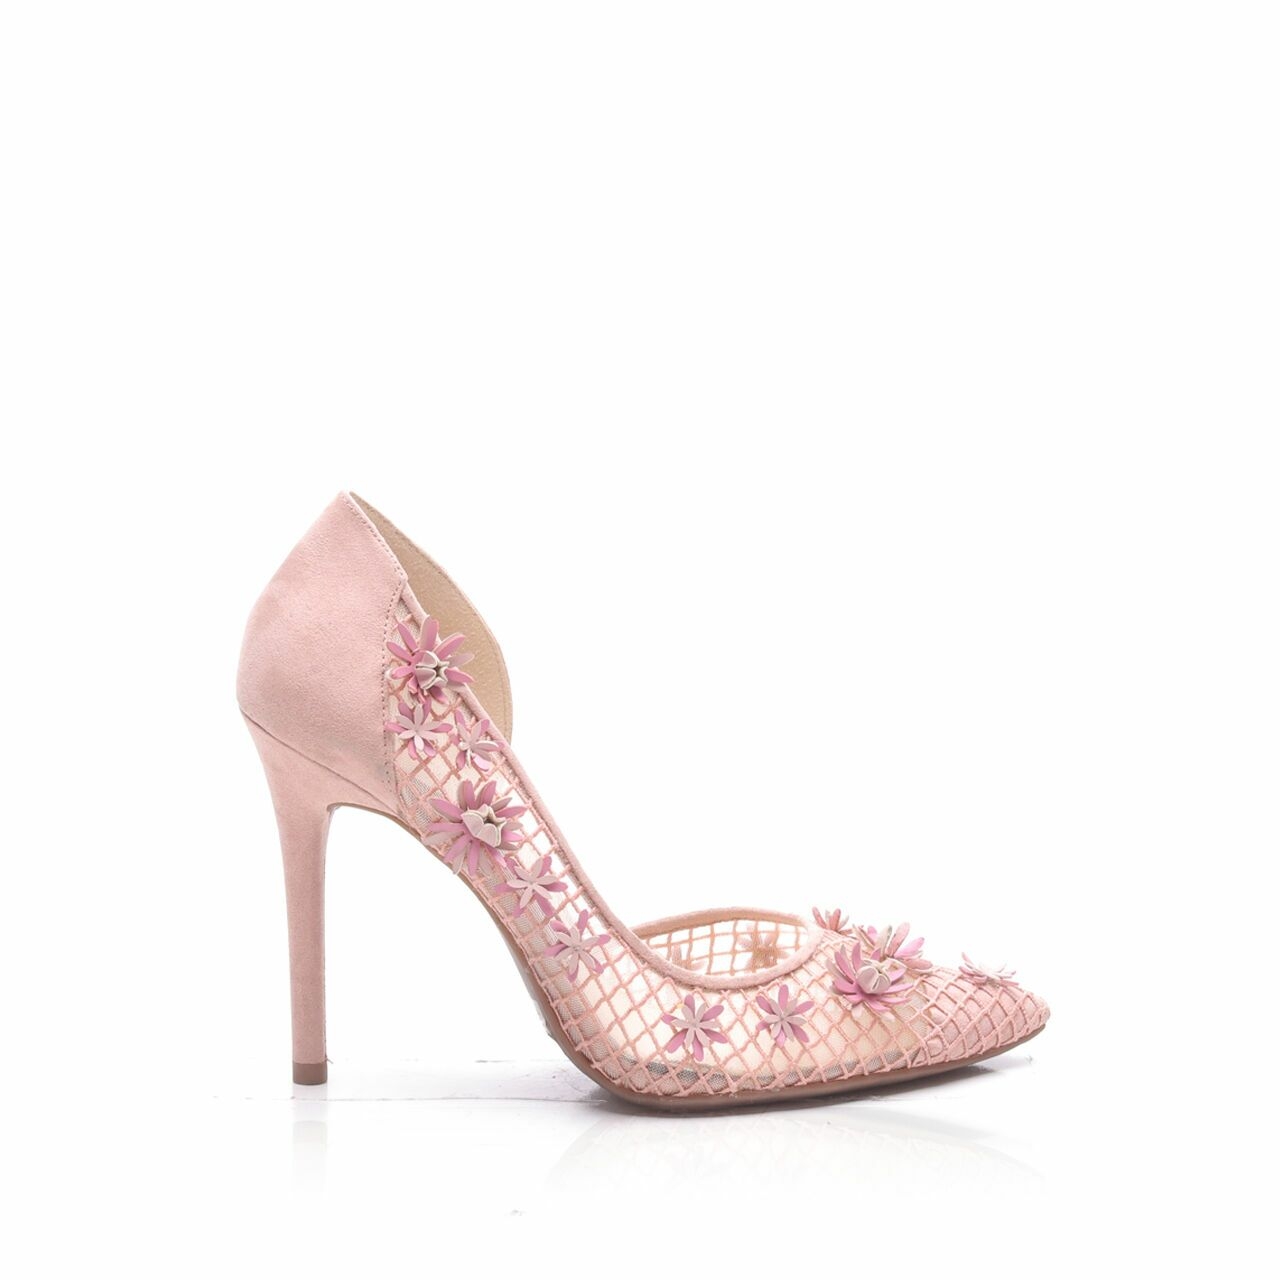 Jessica Simpson Sheer Mesh Pink Heels